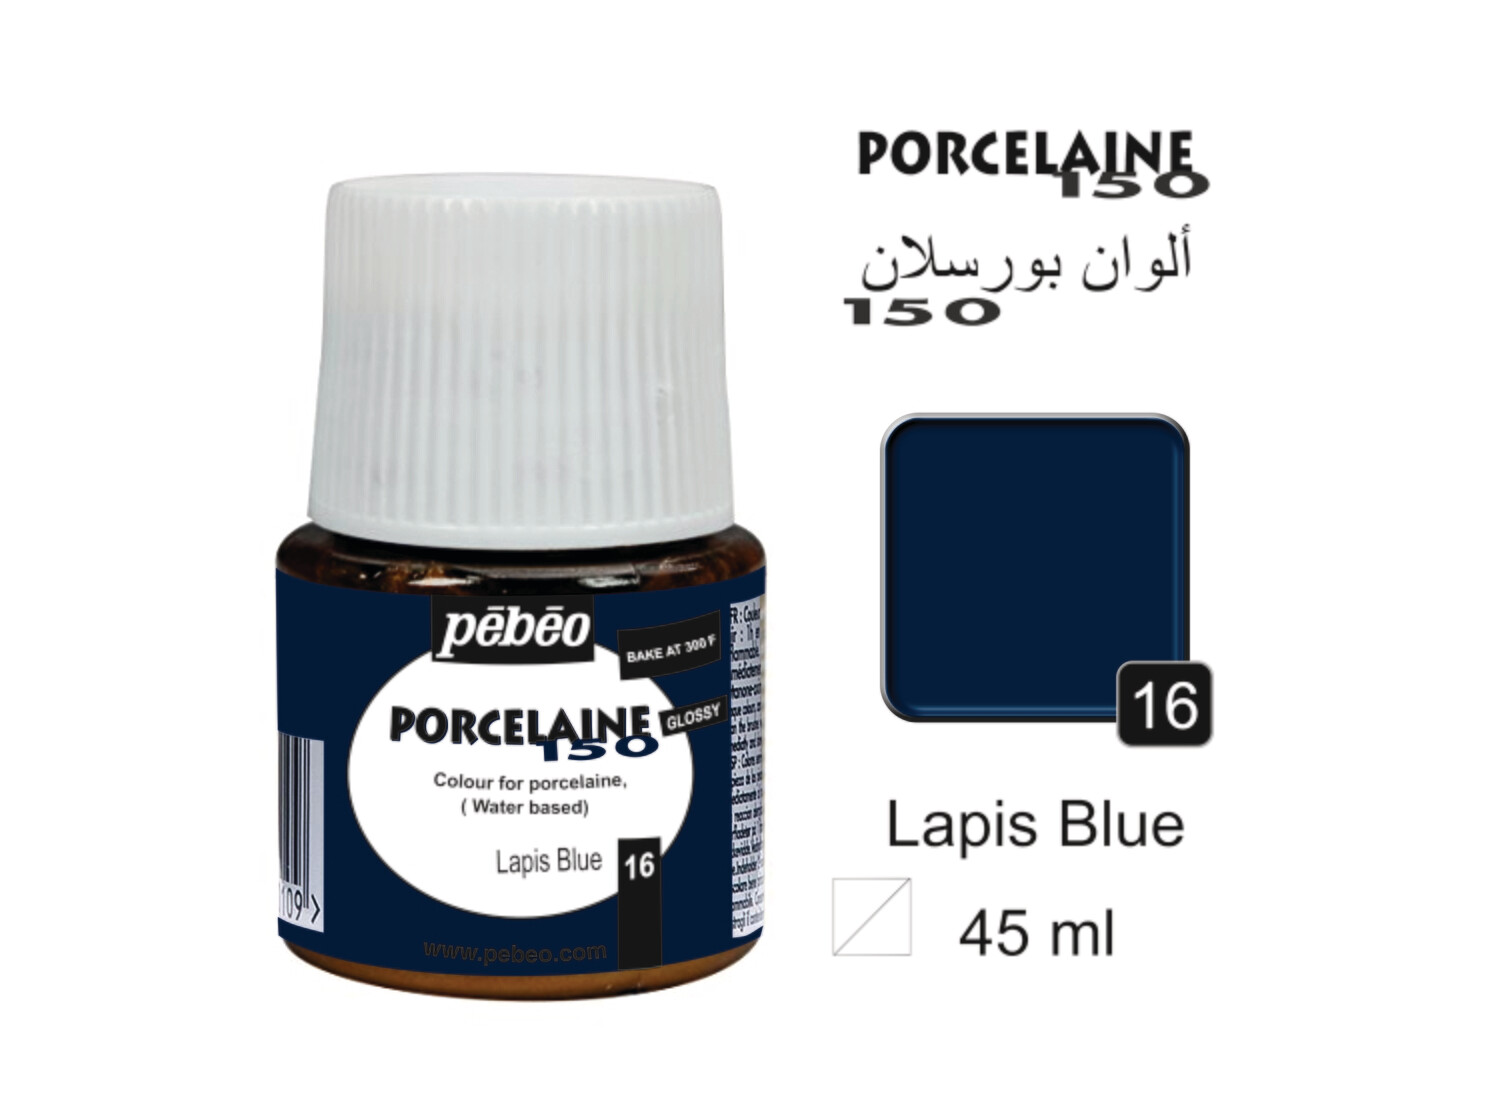 PORCELAINE 150, GLOSS 45 ml, Lapis blue No. 16